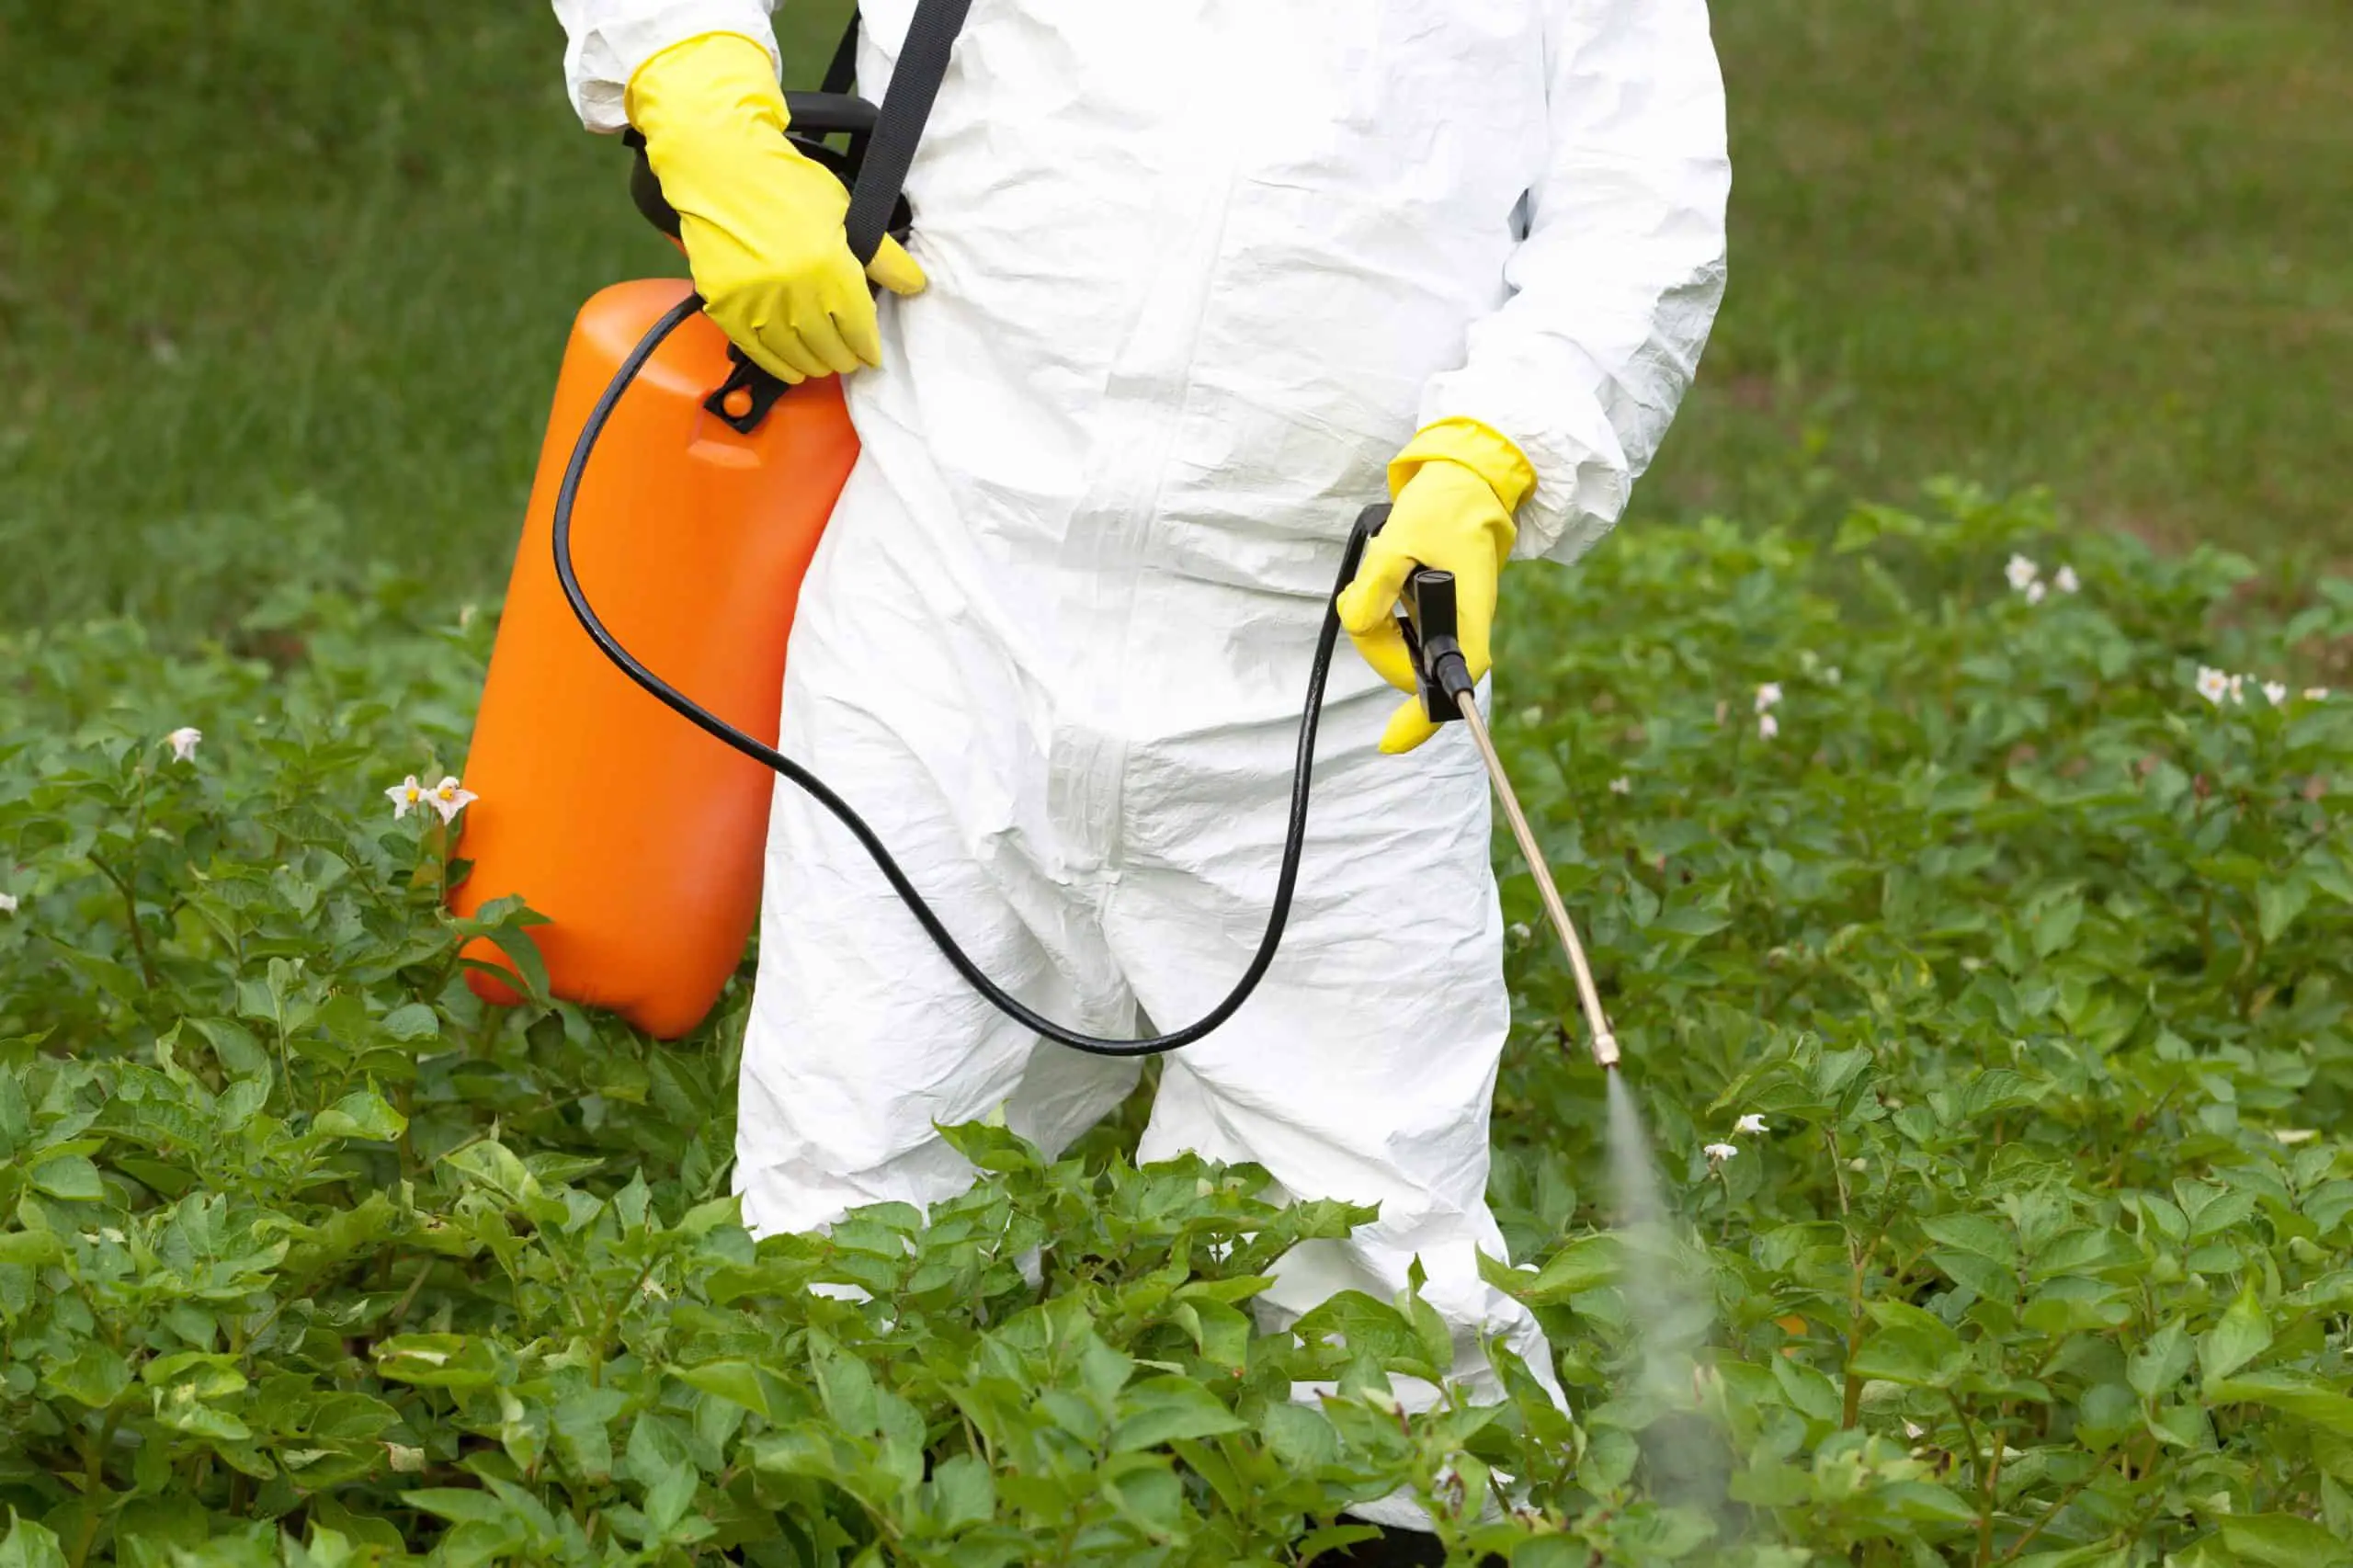 Japanese knotweed treatment via spraying glysophate chemicals